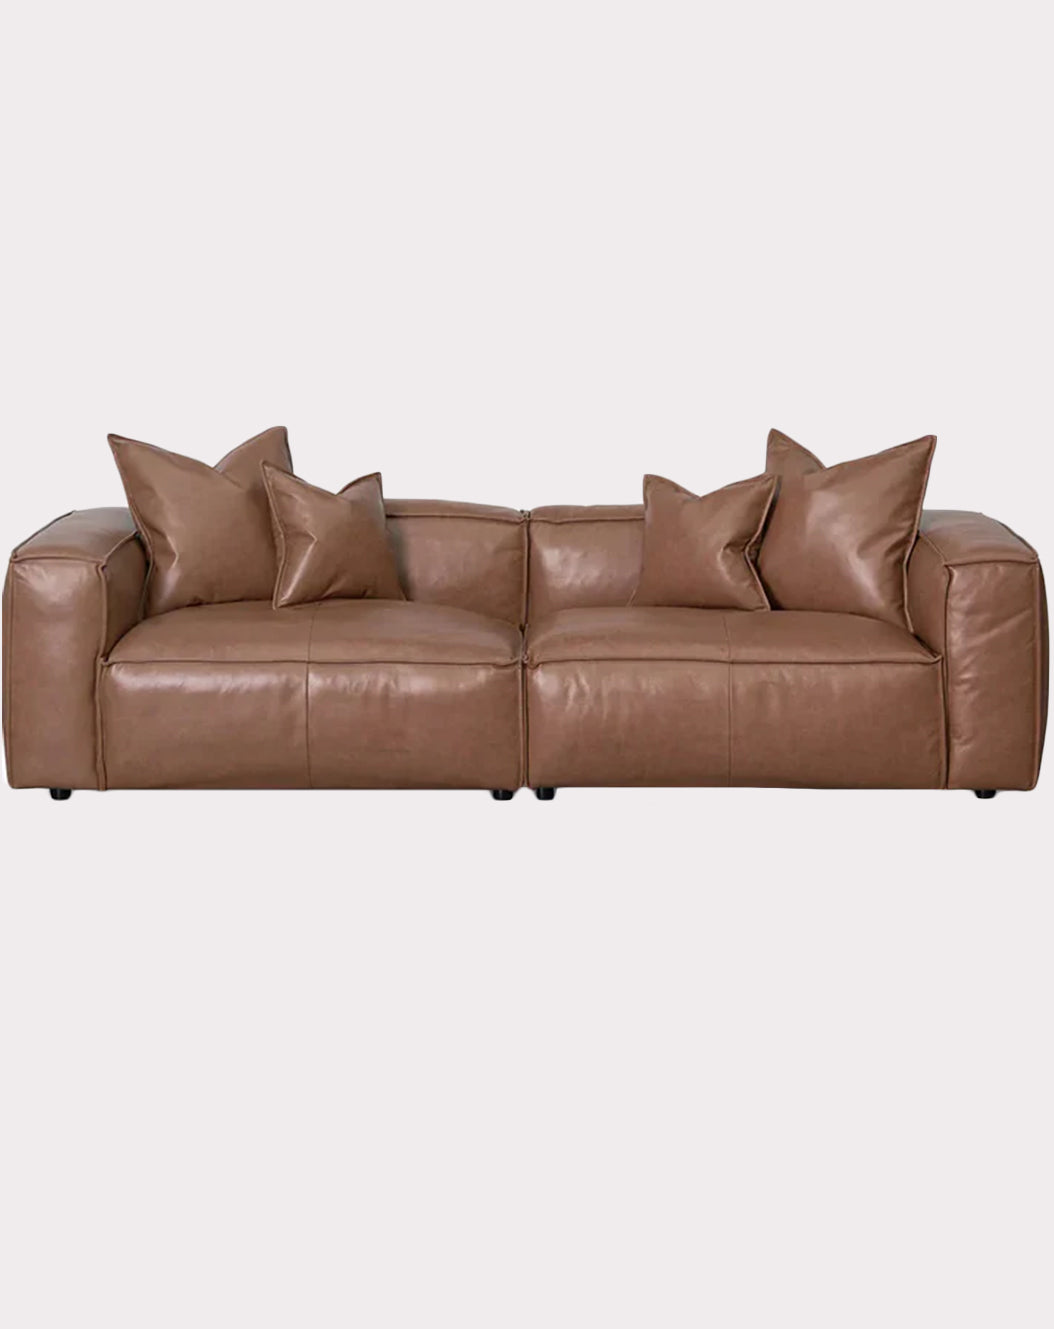 Morgan 4 Seater Sofa - Caramel Brown